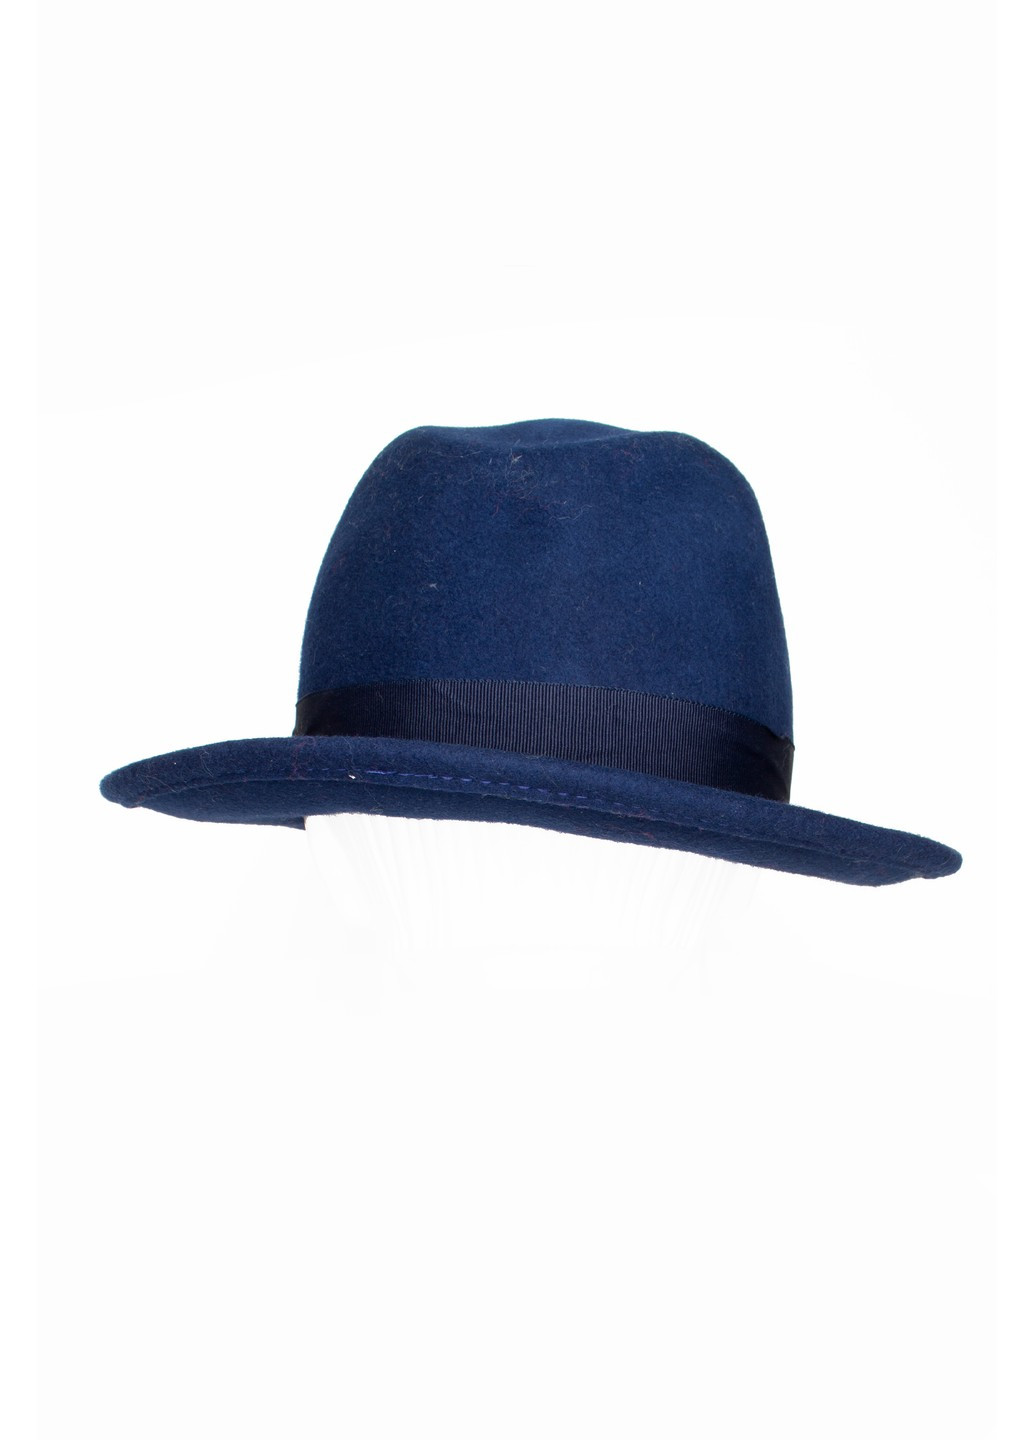 Шляпа синяя с полями Rendez Vous Scotch&Soda (263061859)